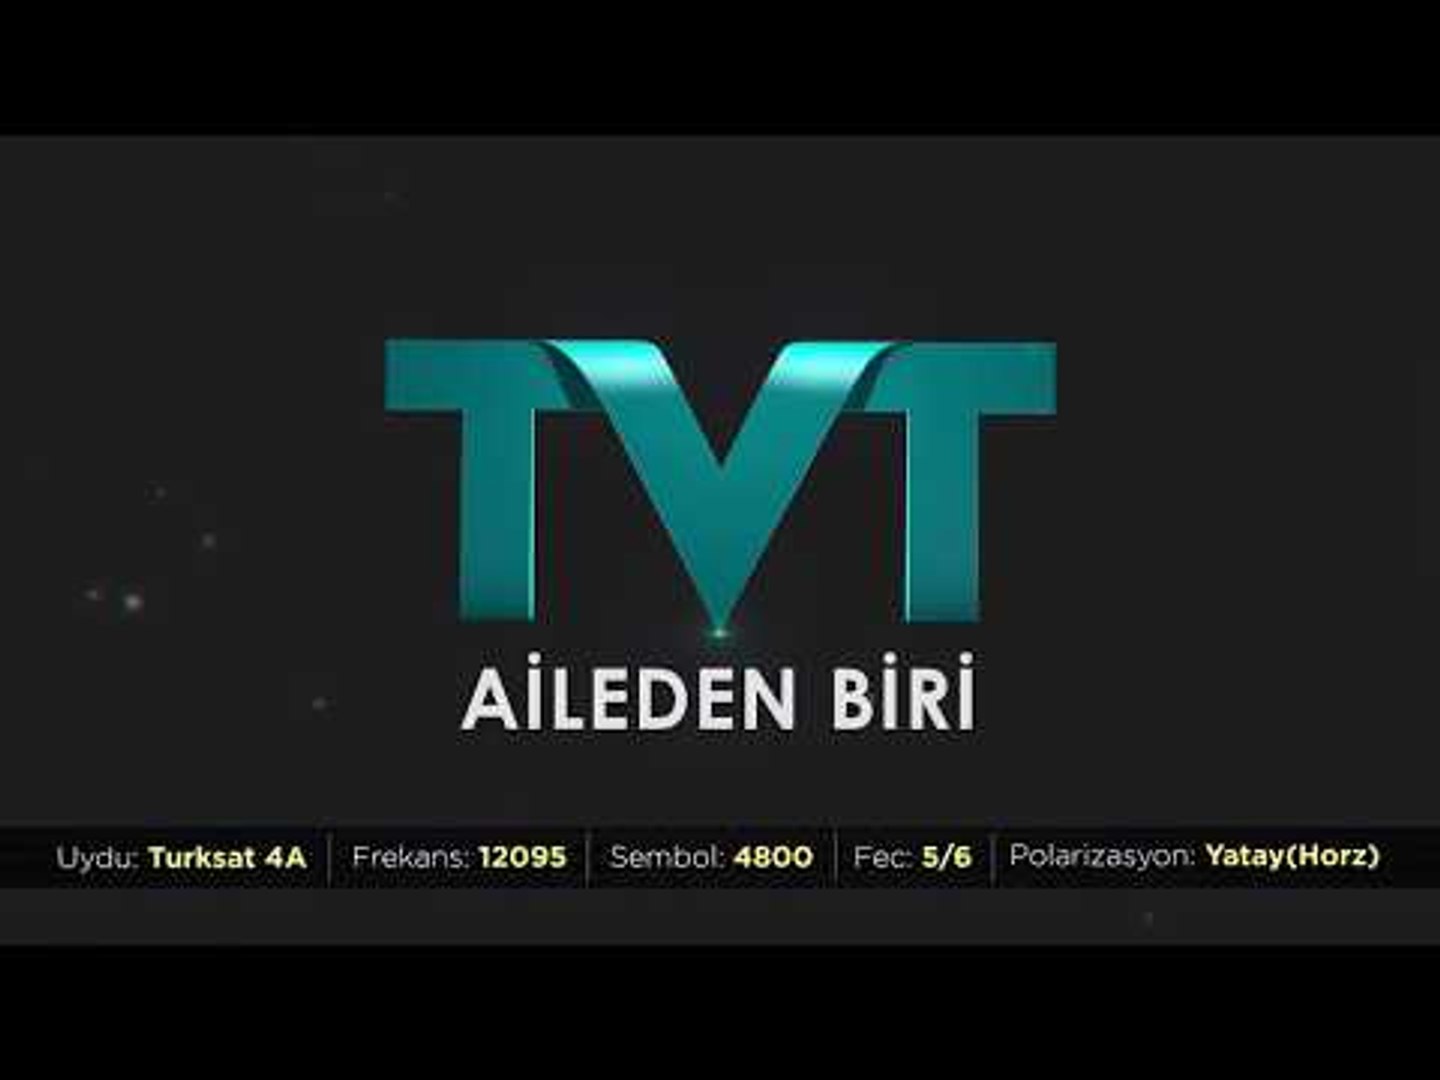 TVT Frekans Bilgisi. - Dailymotion Video